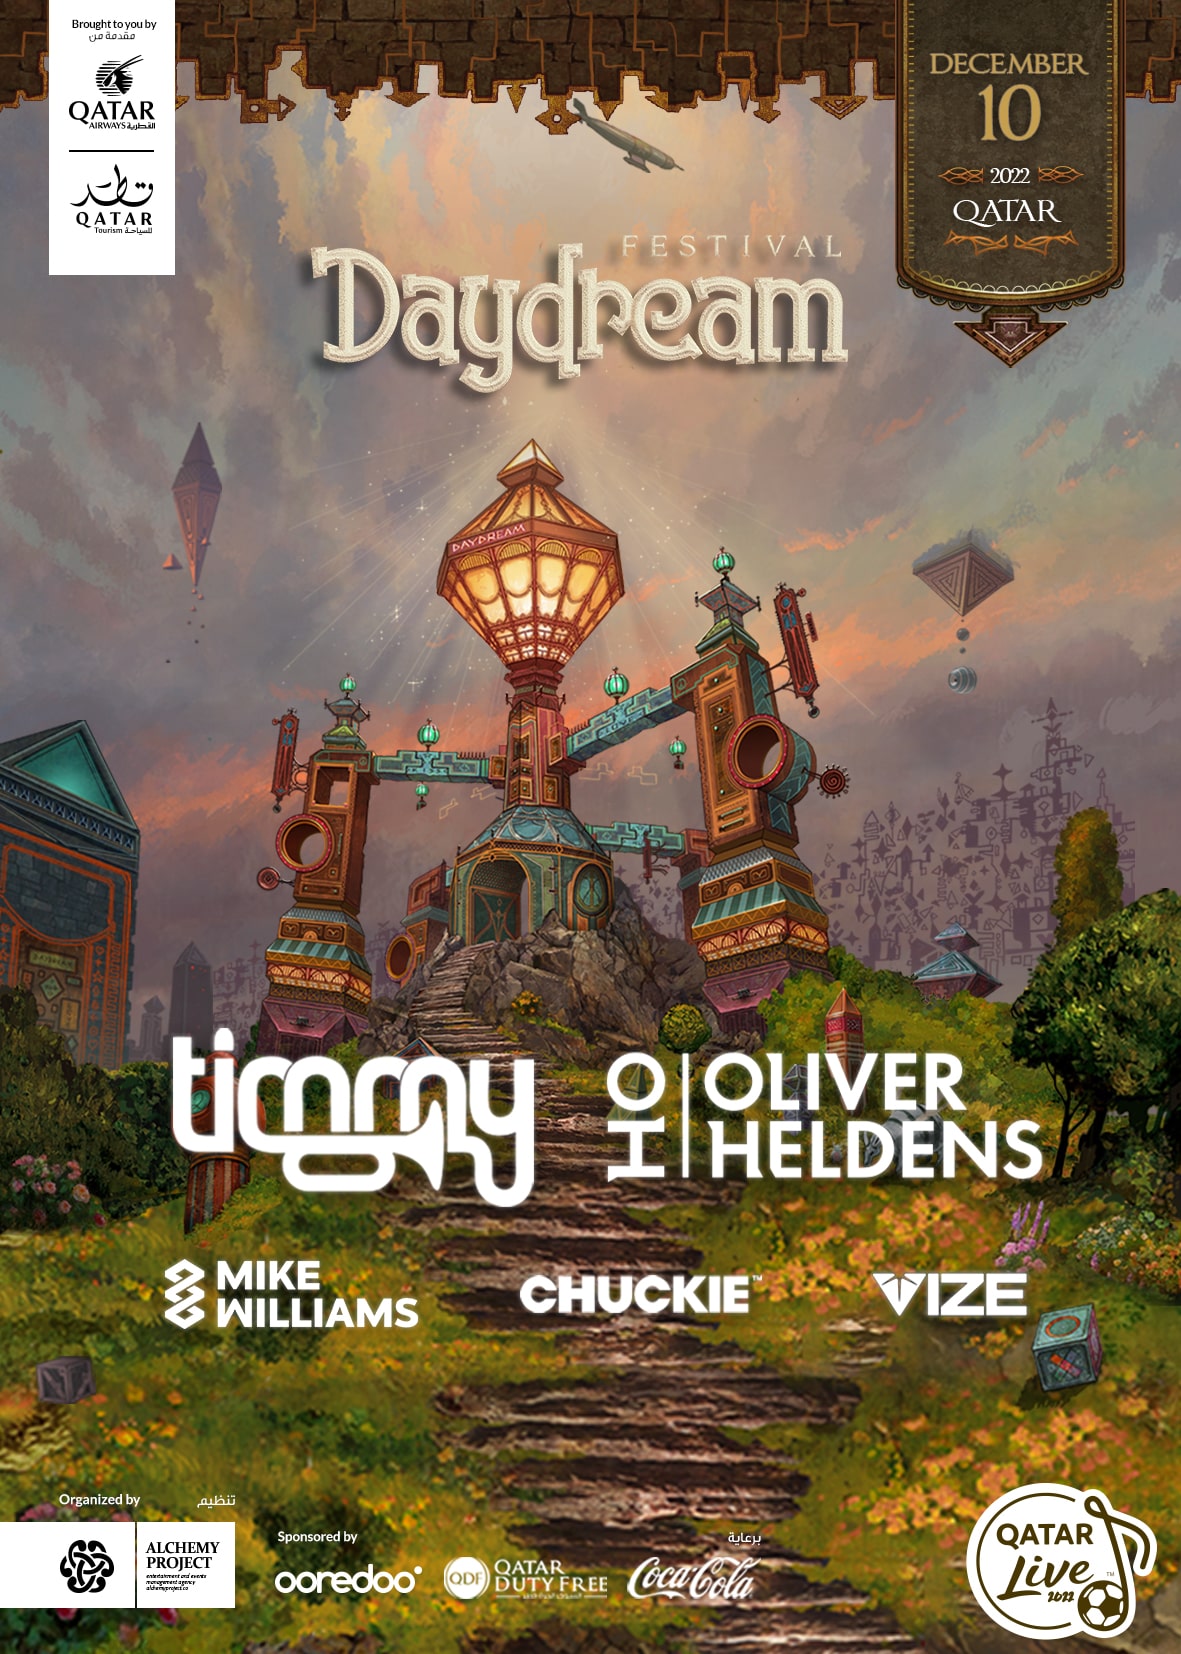 Daydream Music Festival 10th December